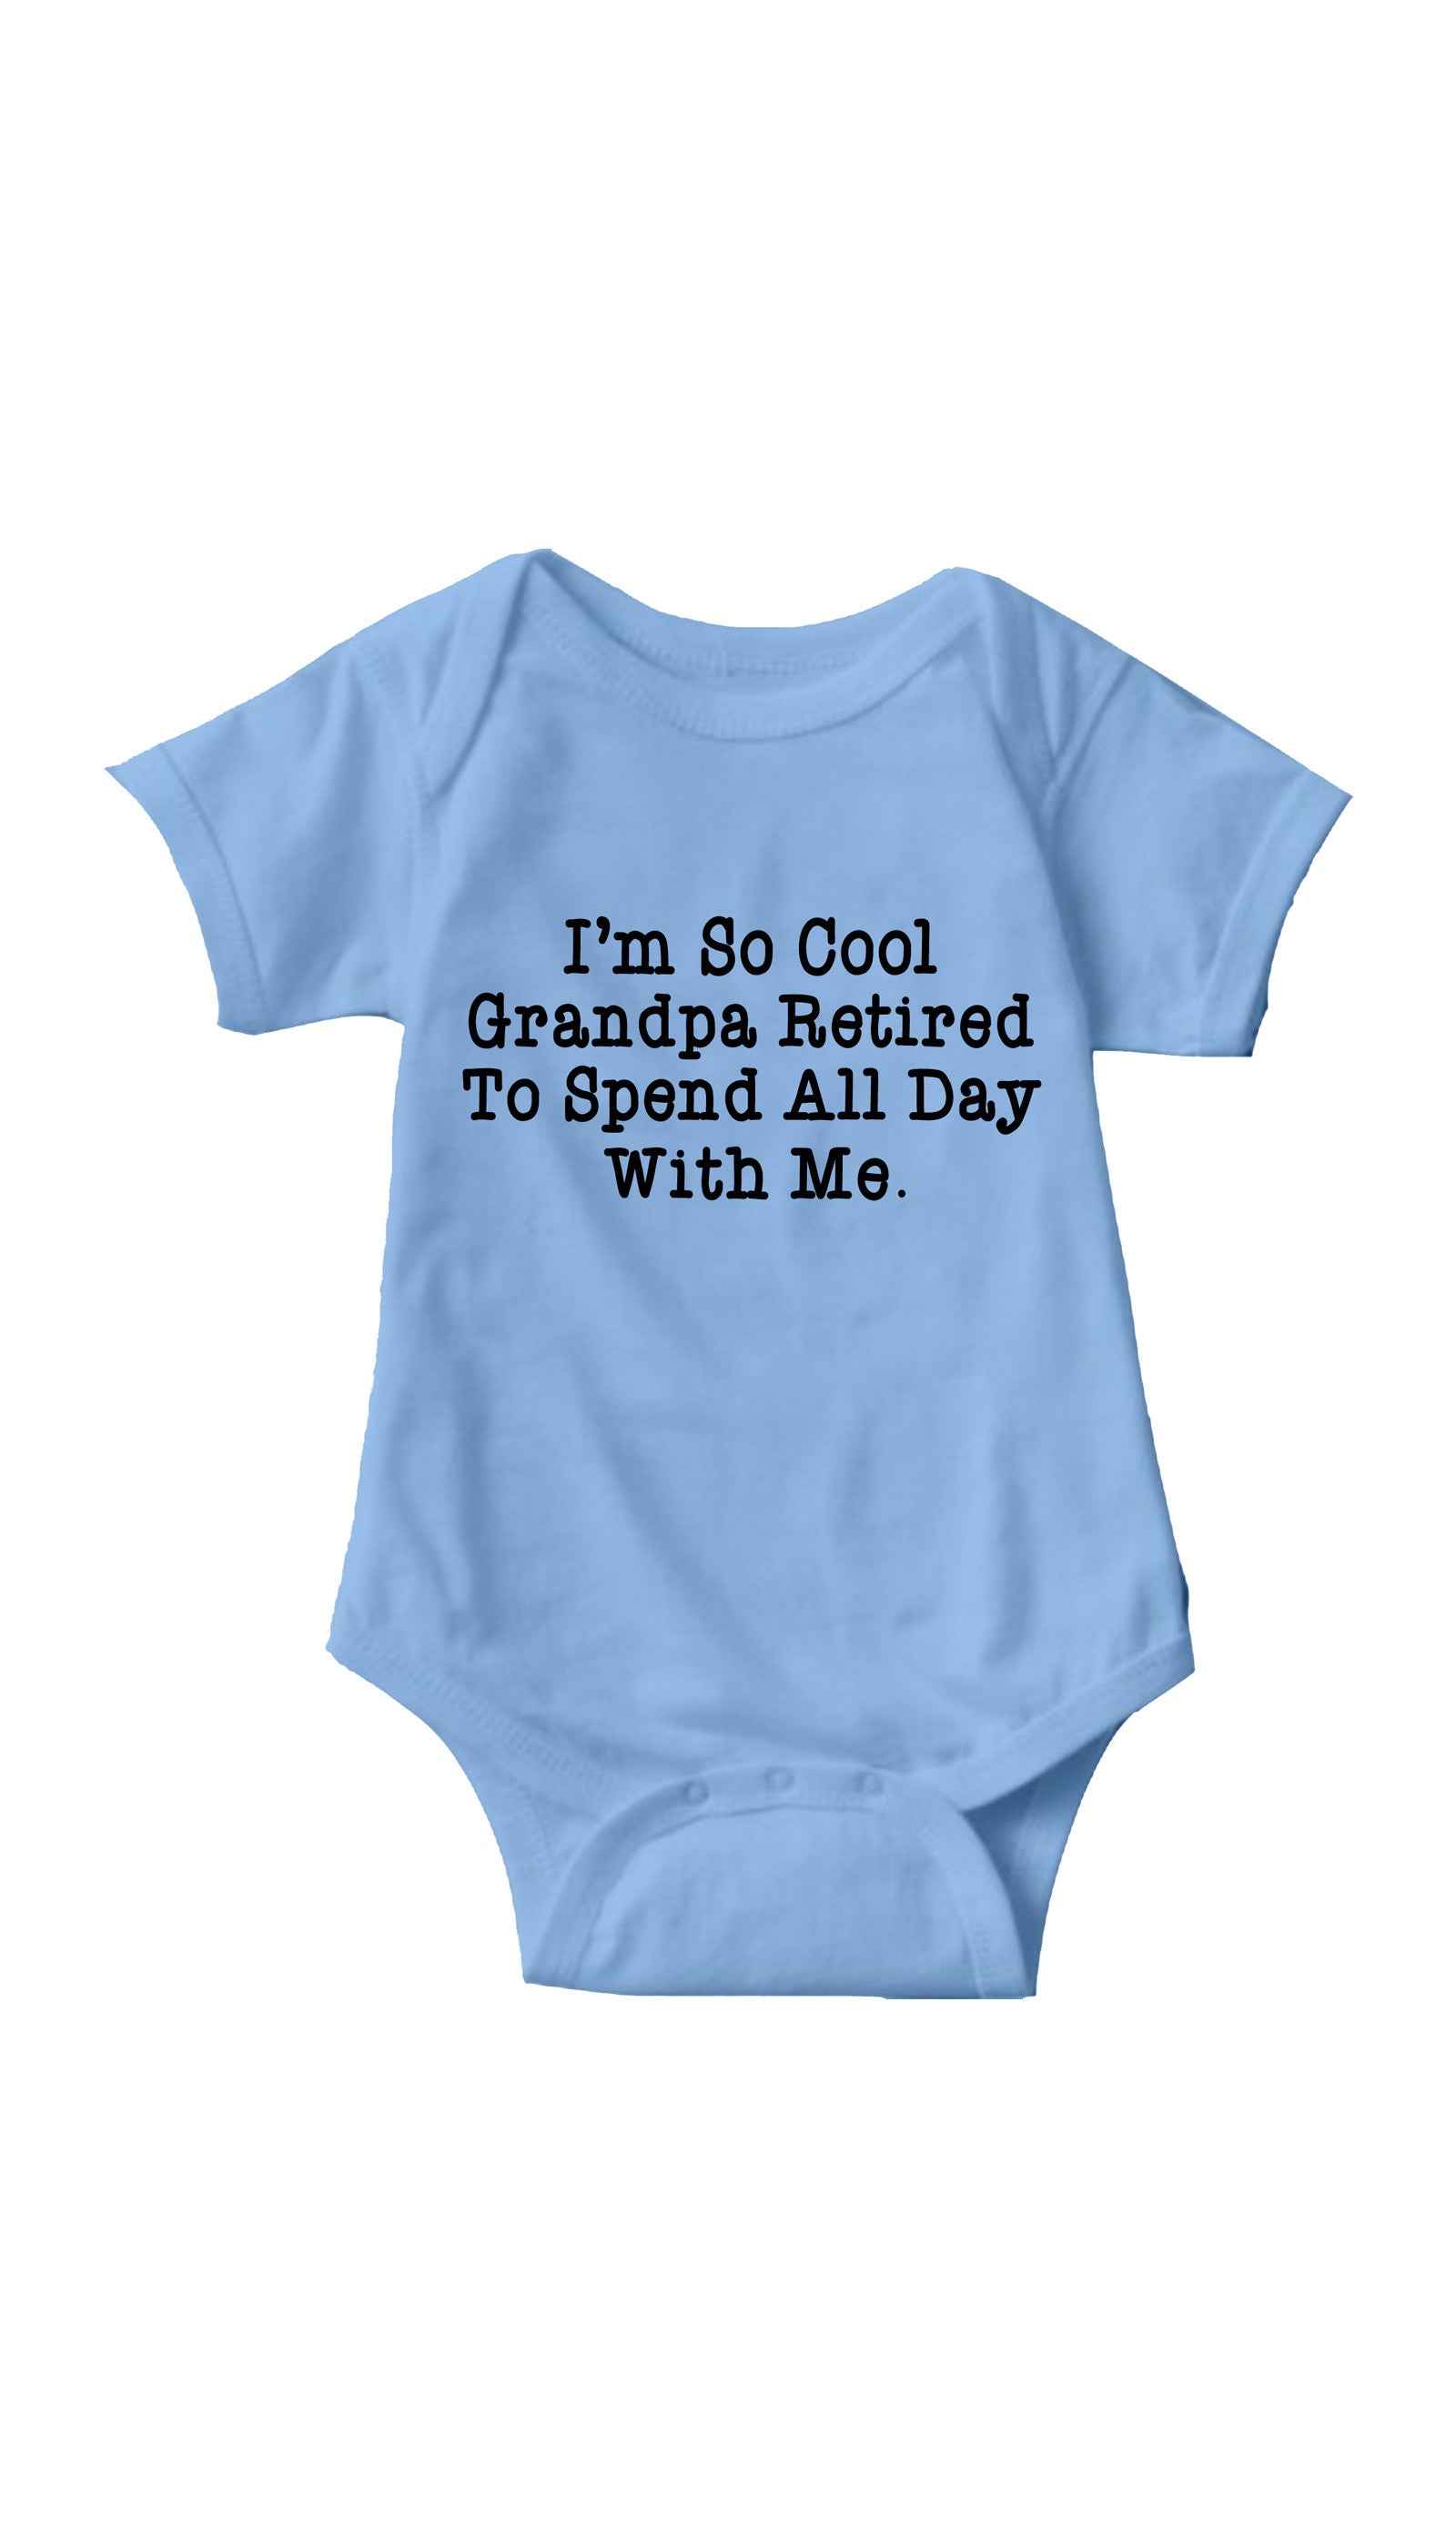 funny grandpa onesies